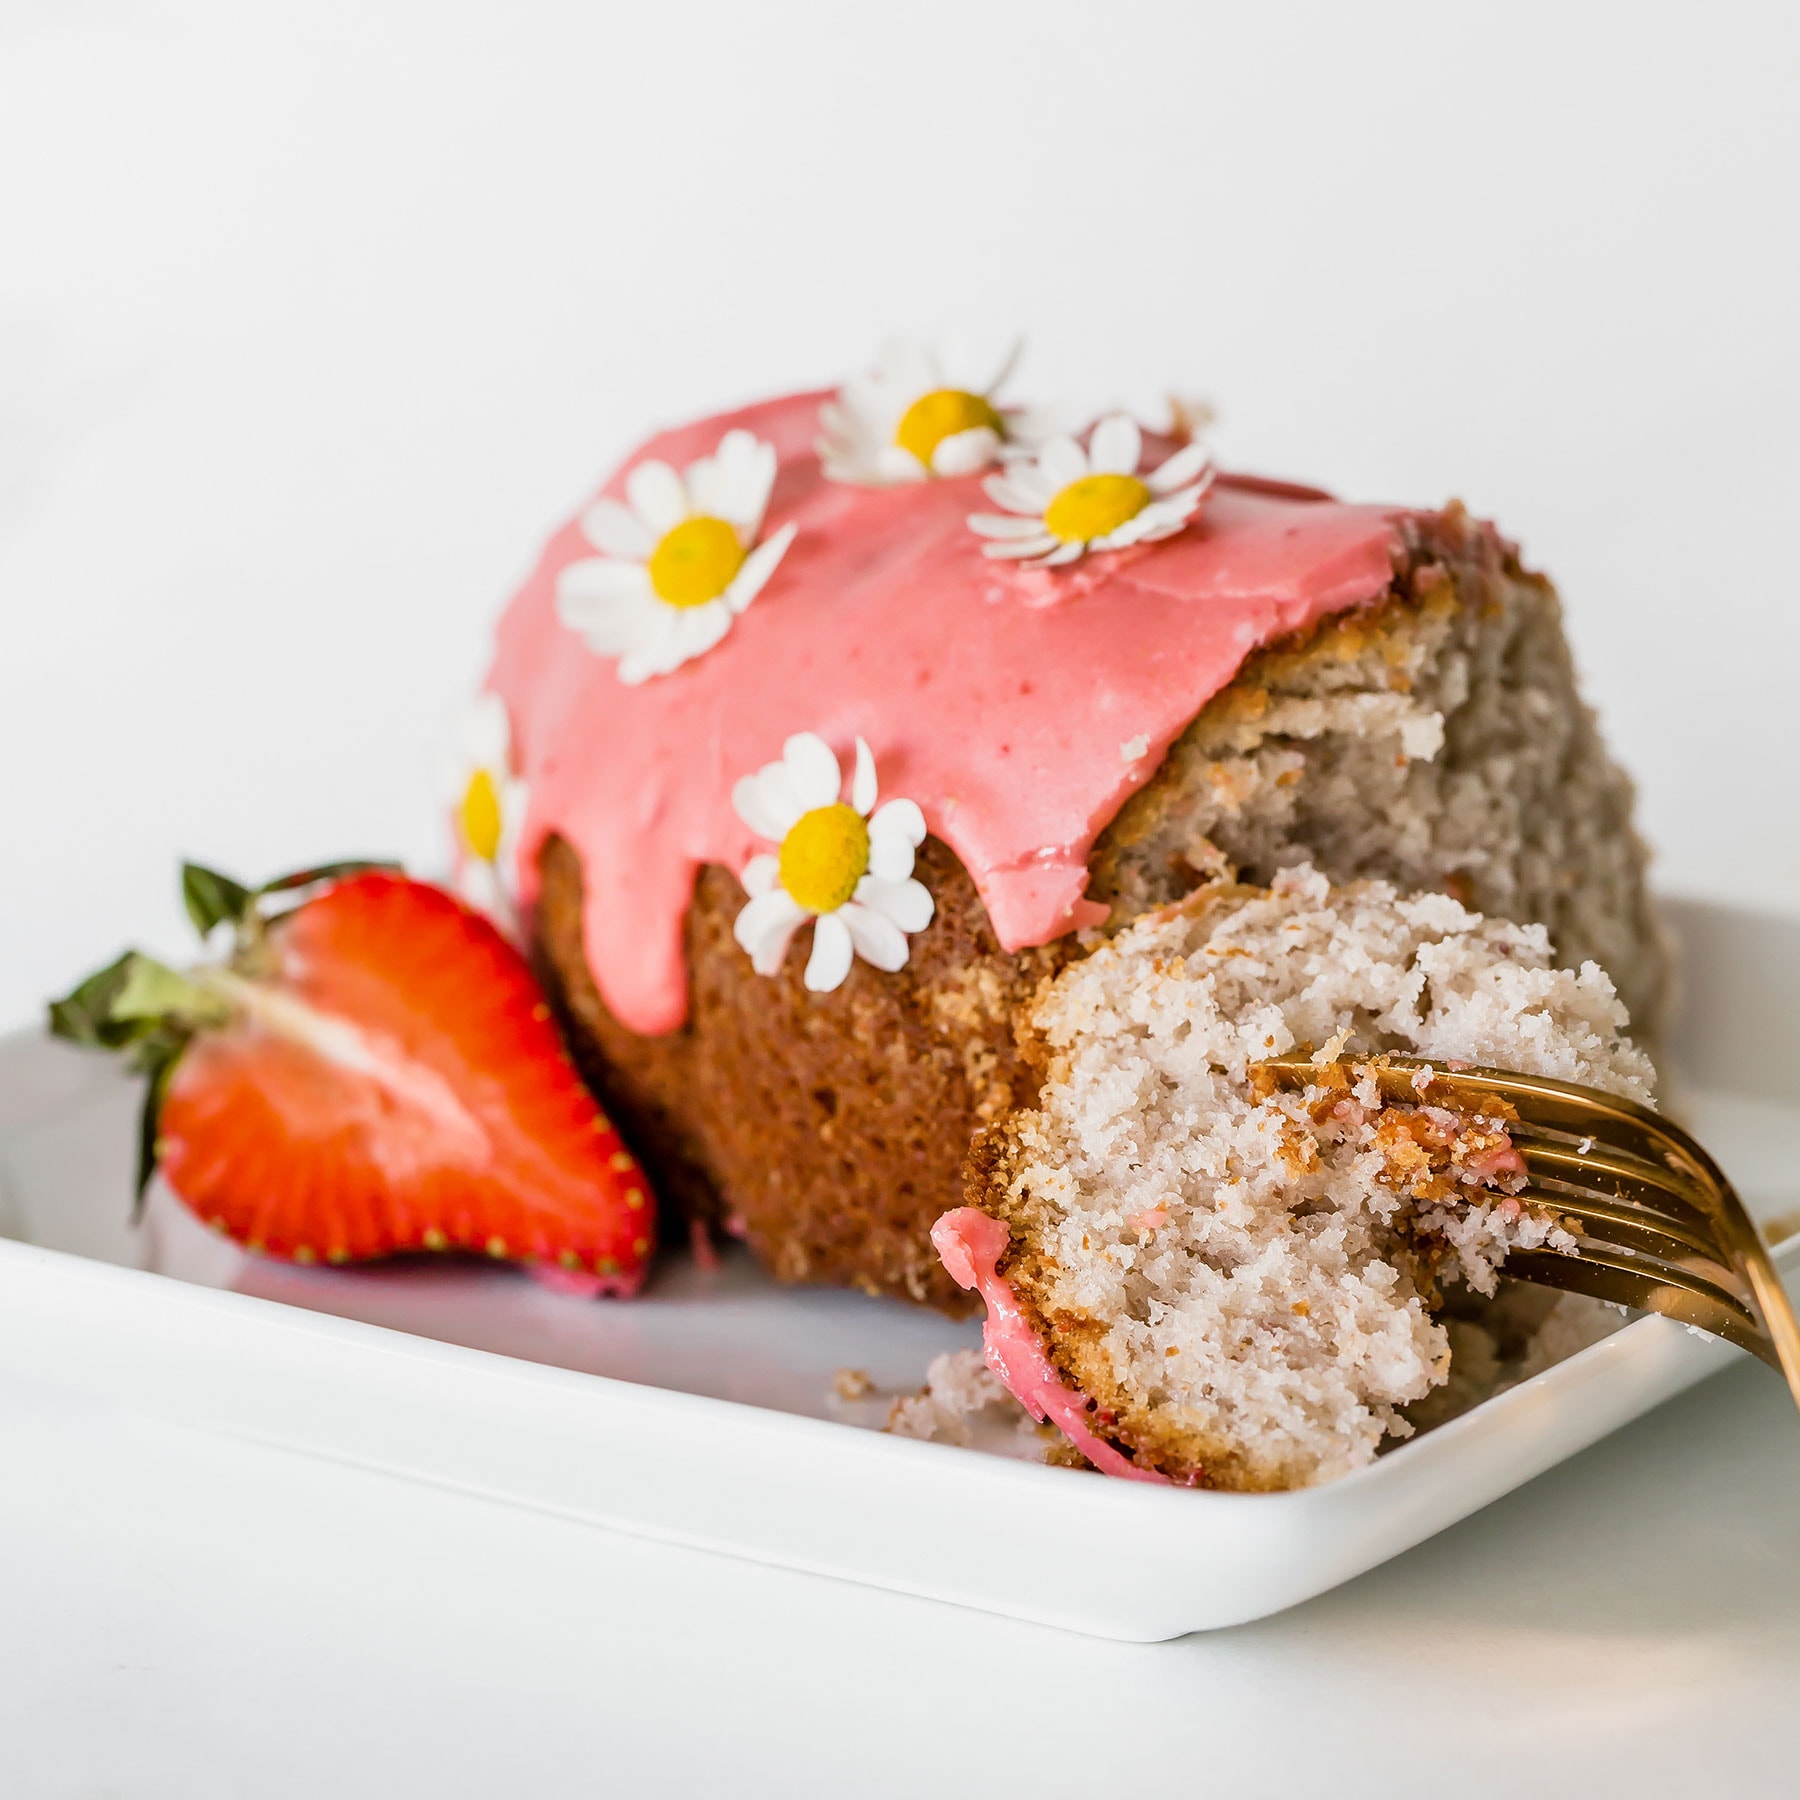 Strawberry Bundt Cake